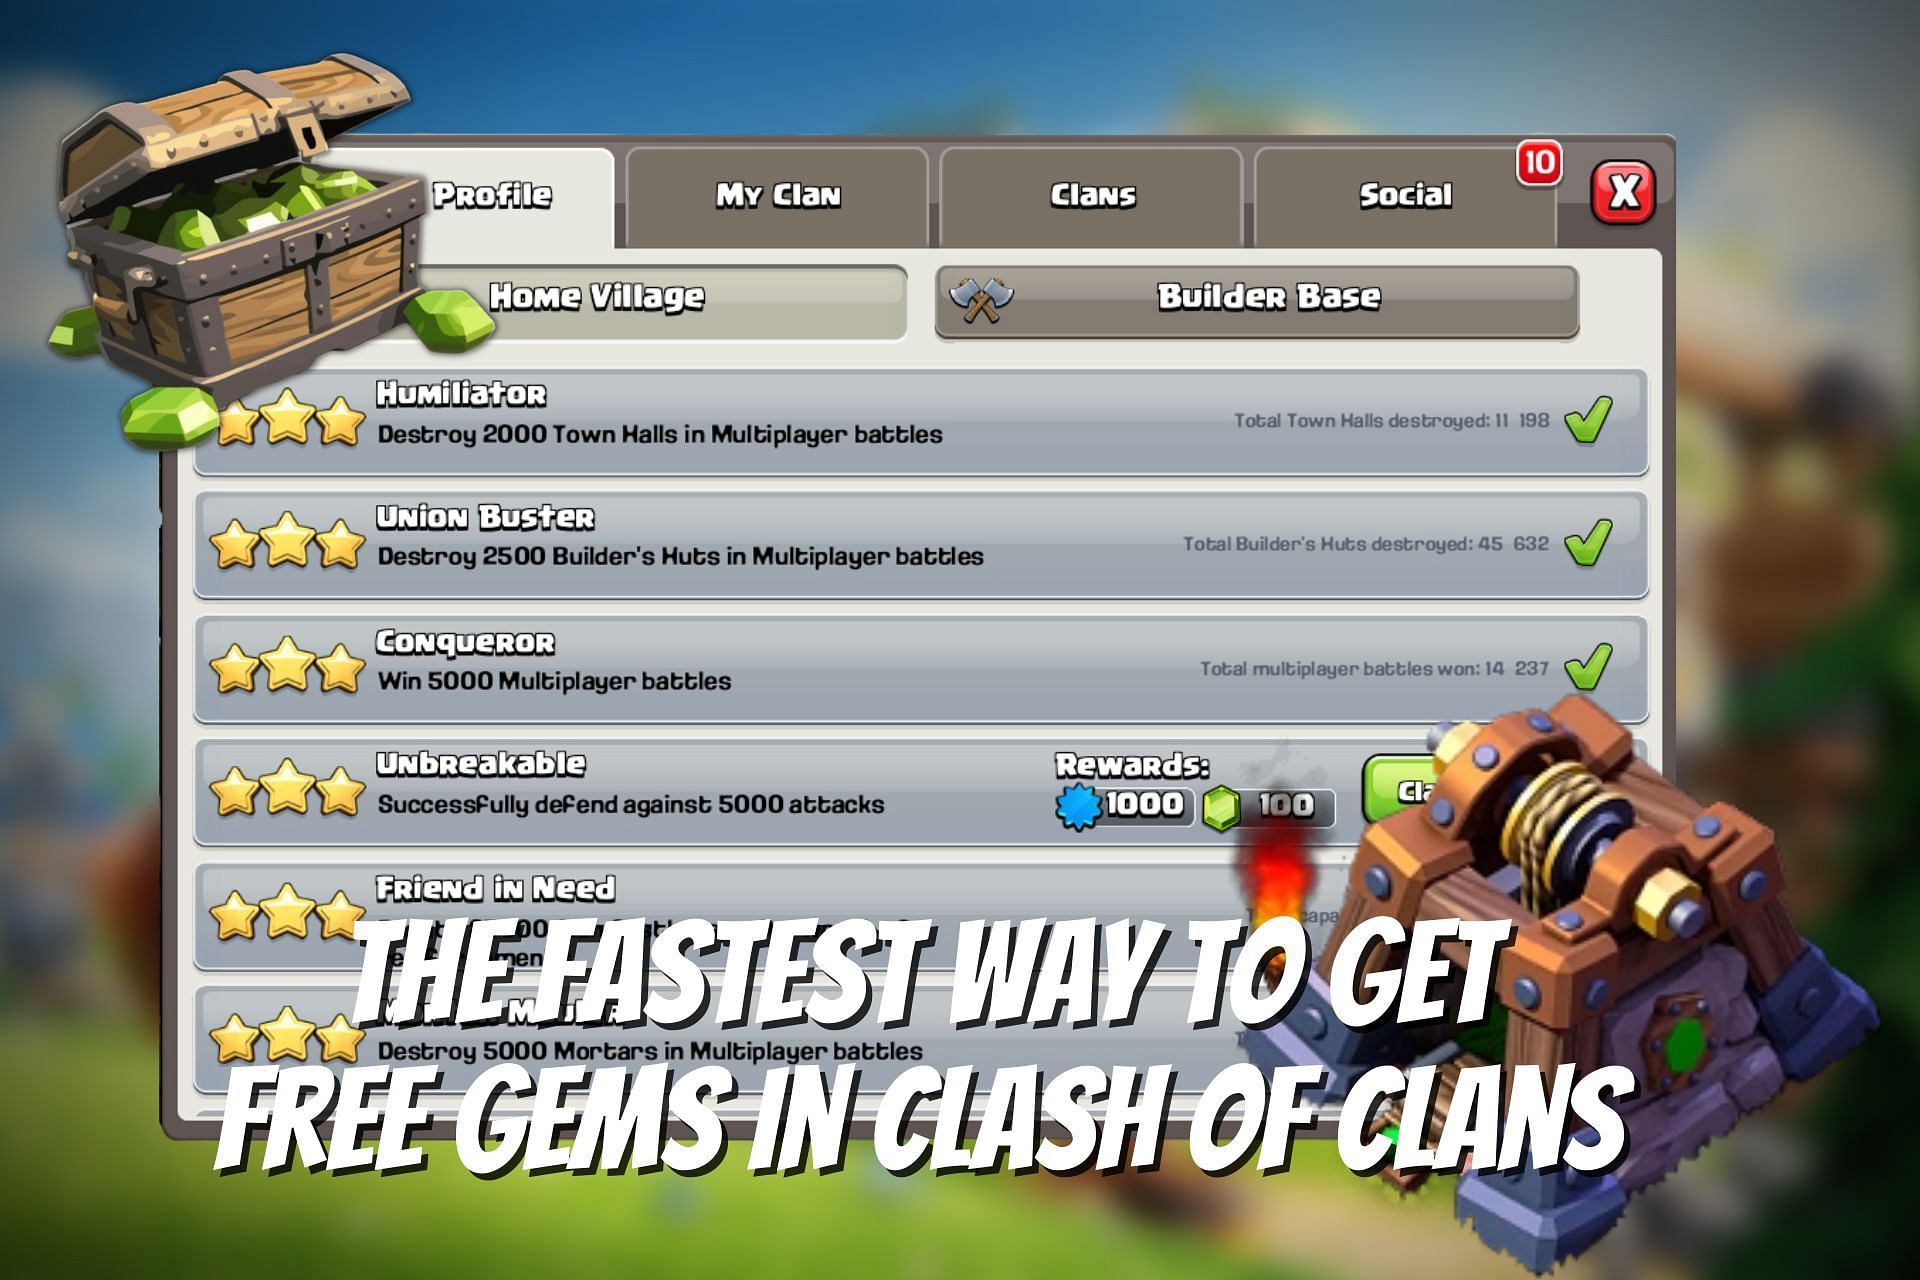 Earn free Gems in Clash of Clans (Image by Sportskeeda)